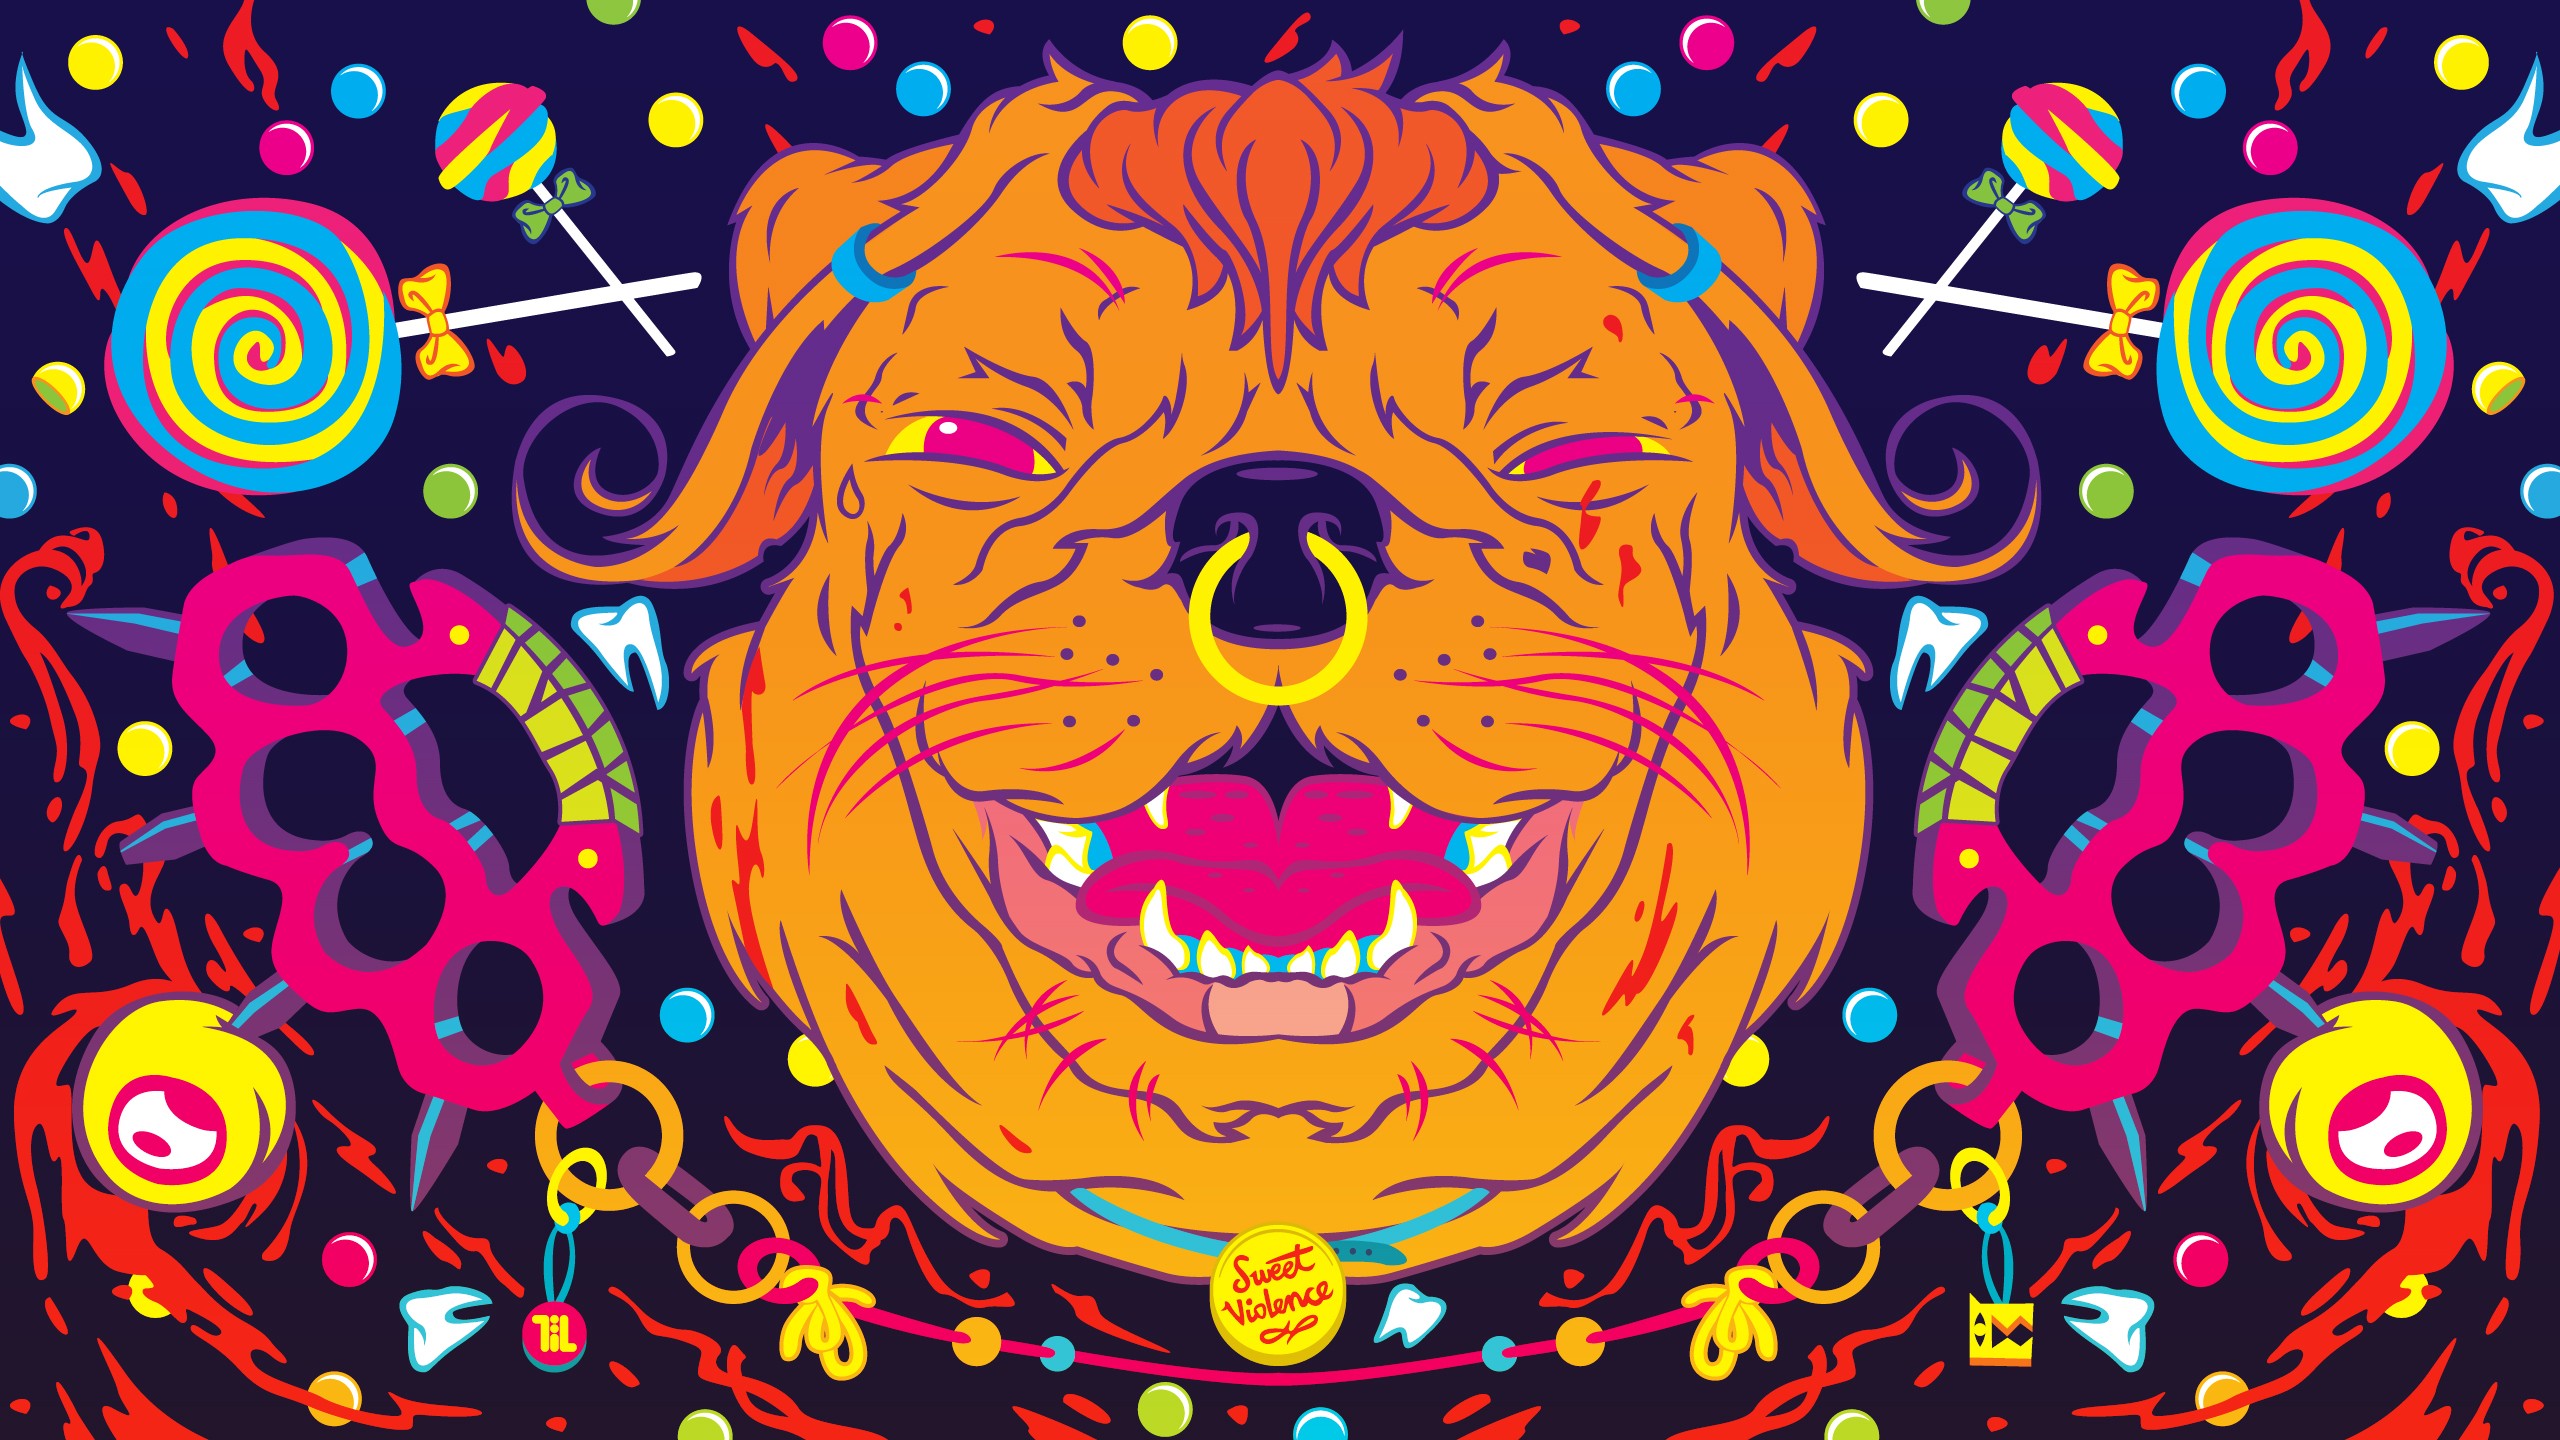 General 2560x1440 colorful dog humor animals artwork food sweets lollipop mammals